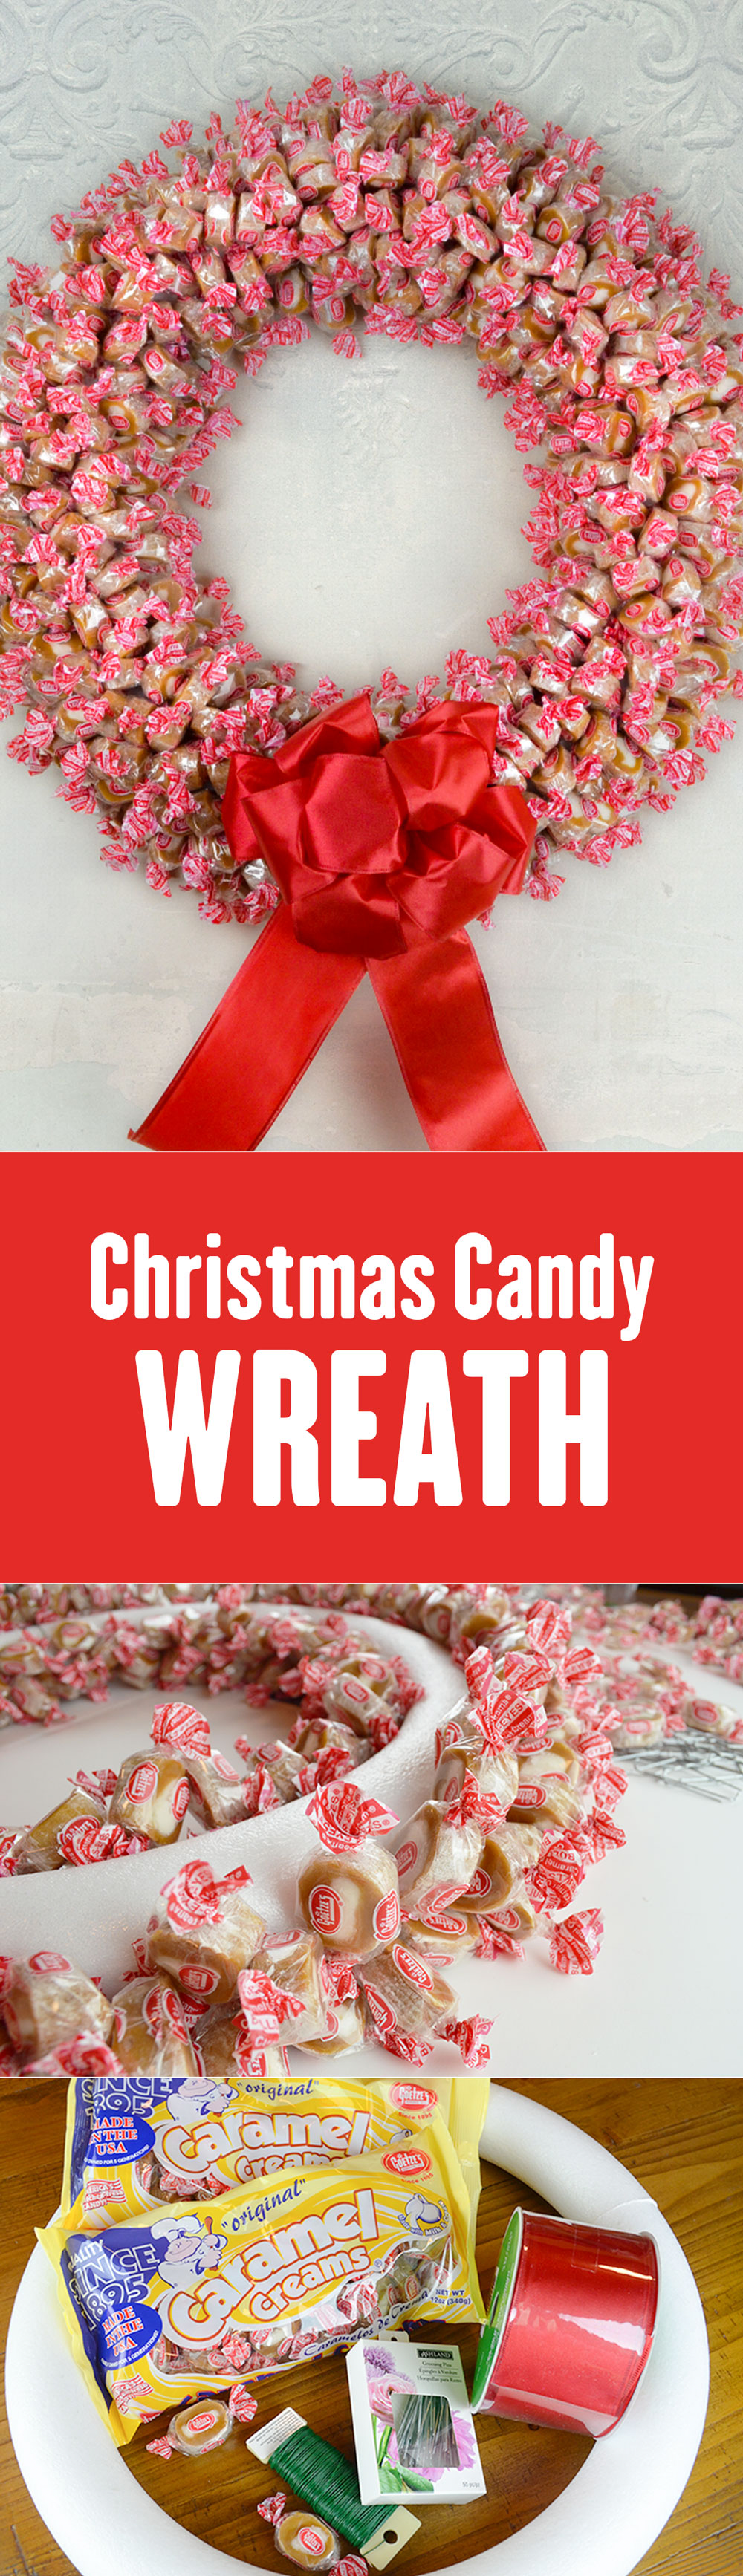 homemade-caramel-creams-candy-wreath-holidays-05